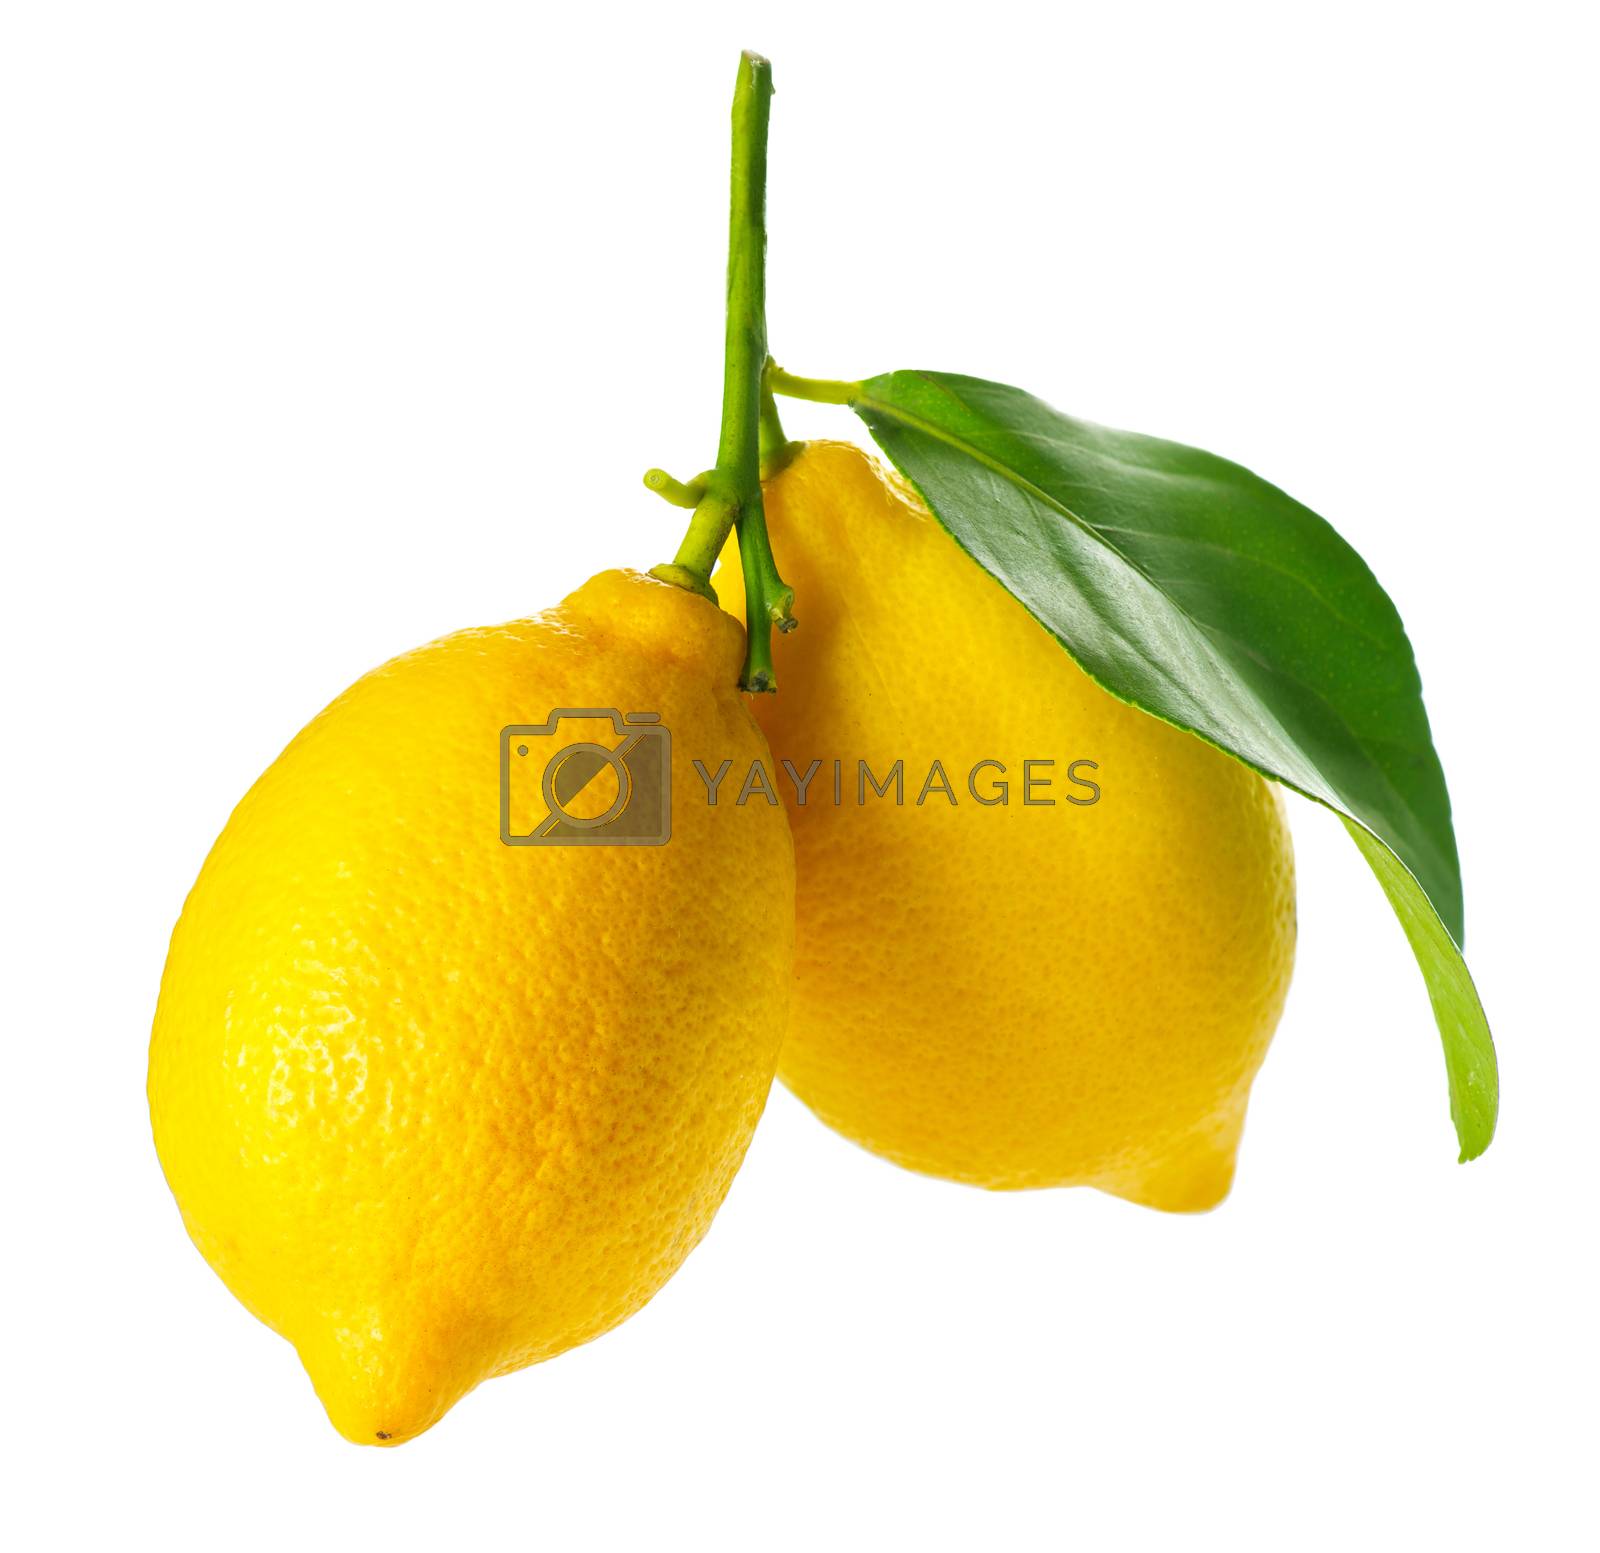 Royalty free image of Lemon isolated on White. Fresh and Ripe Lemons by SubbotinaA